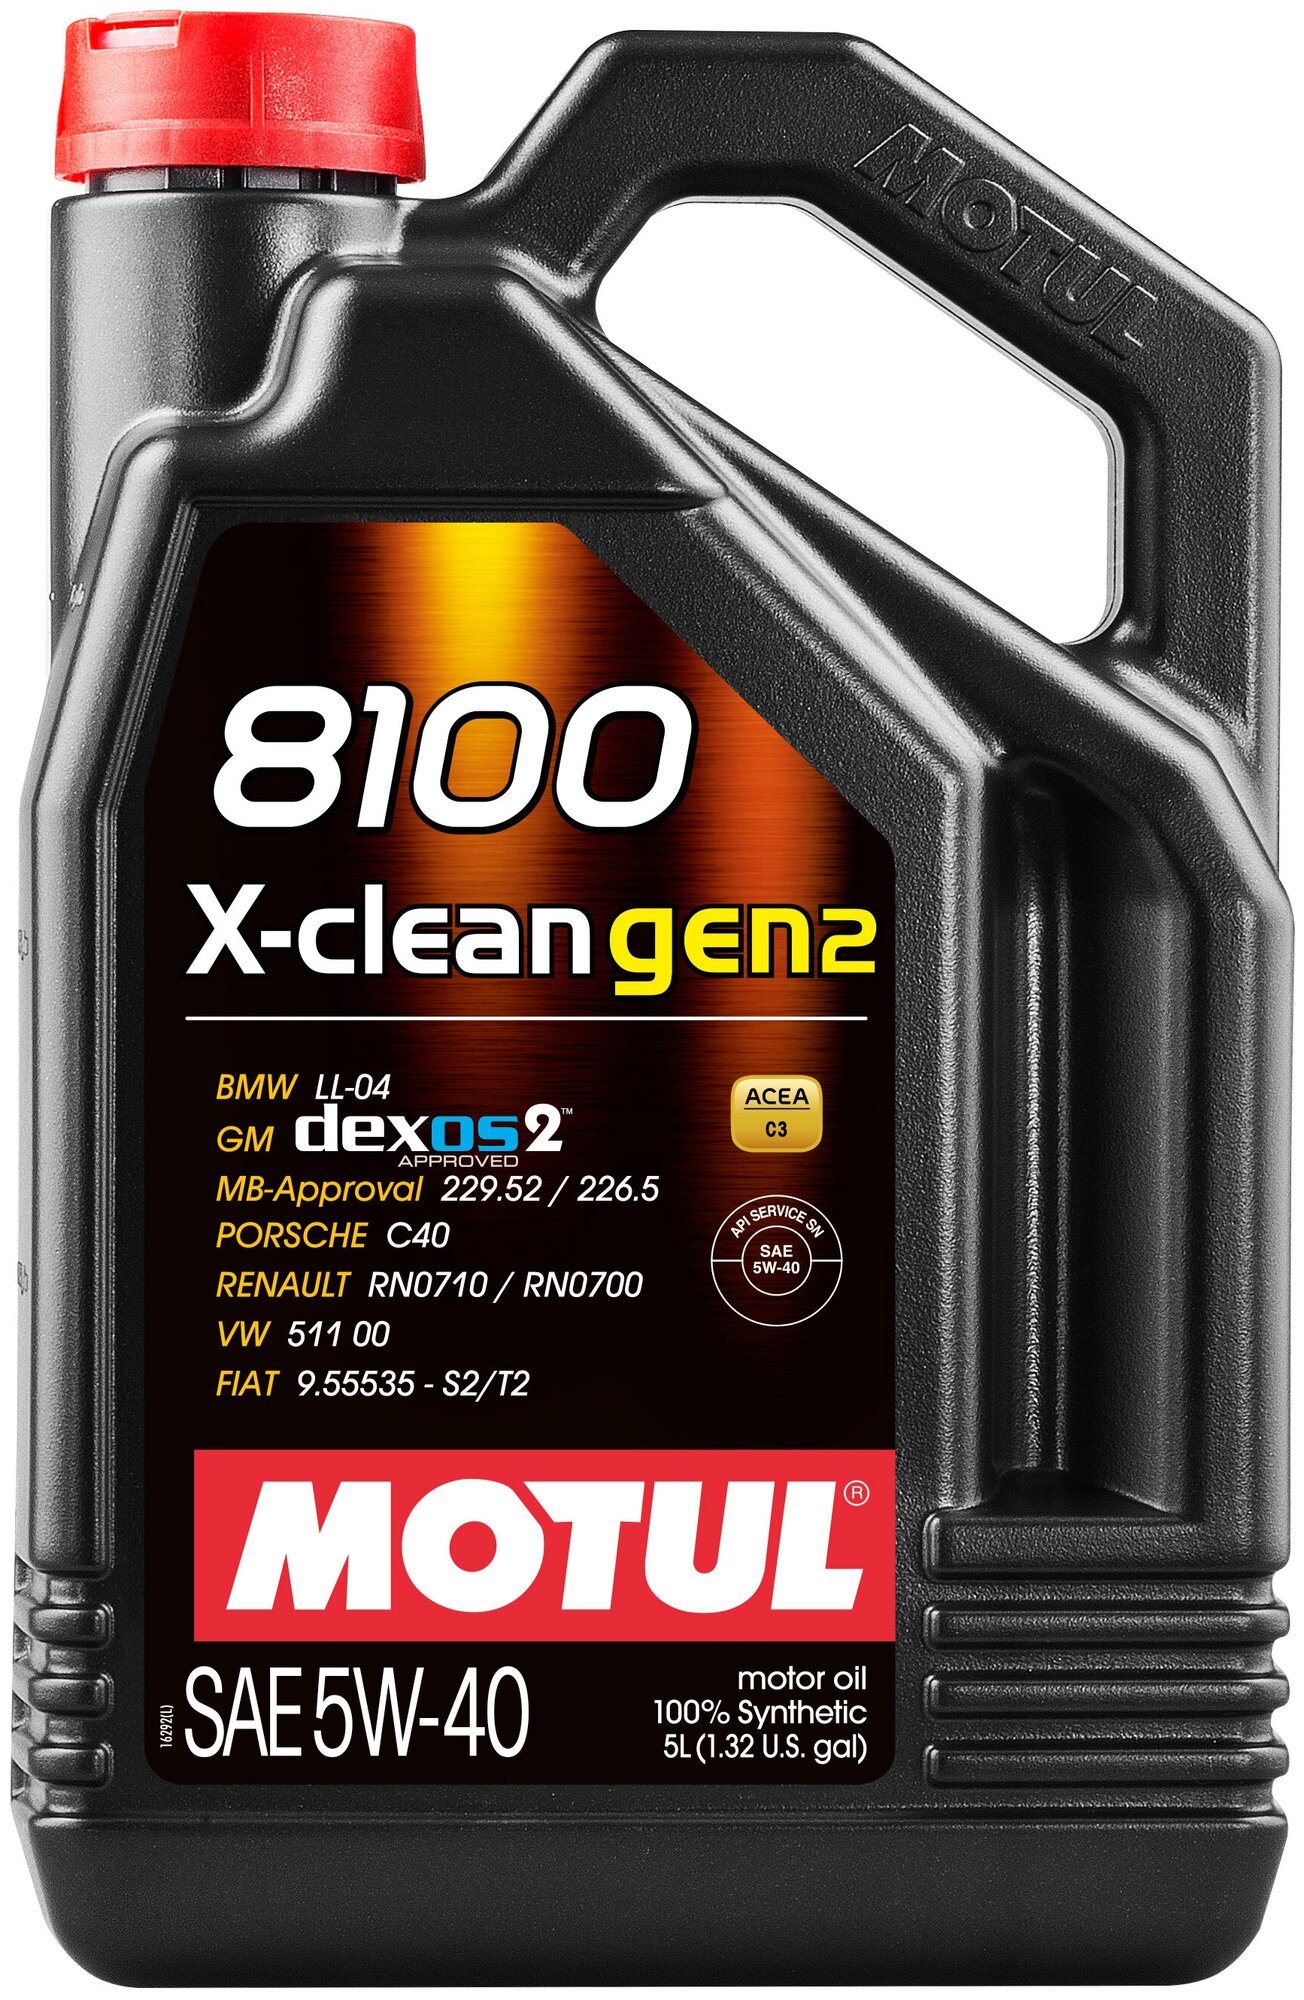 Синтетическое моторное масло Motul 8100 X-clean GEN2 5W-40, 5 л, 1 шт.